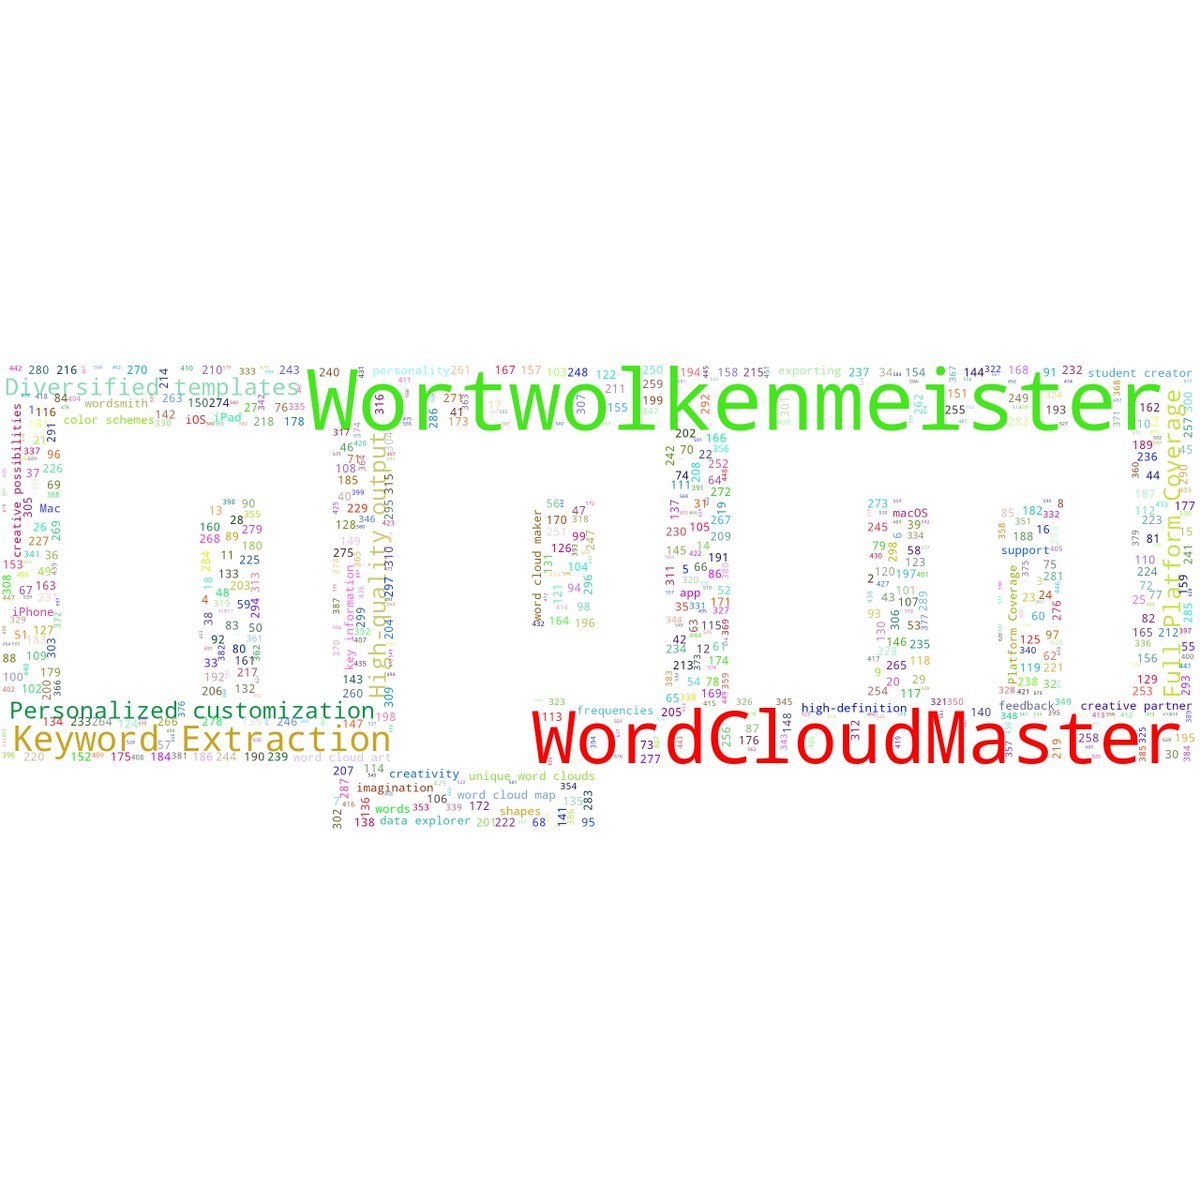 #WordCloudMaster #wordcloud #logonpm #tagcloud #詞雲圖 #Wortwolkendiagramm #词云图 #标签云 #文字云 #Wortwolkendiagramm #nube_de_palabras #Maestro_de_la_nube_de_palabras #iphone #mac #Apple #iPad #ワードクラウドマスター #ワードクラウドマップ

 👉 studio.wordcloudmaster.com 🎉